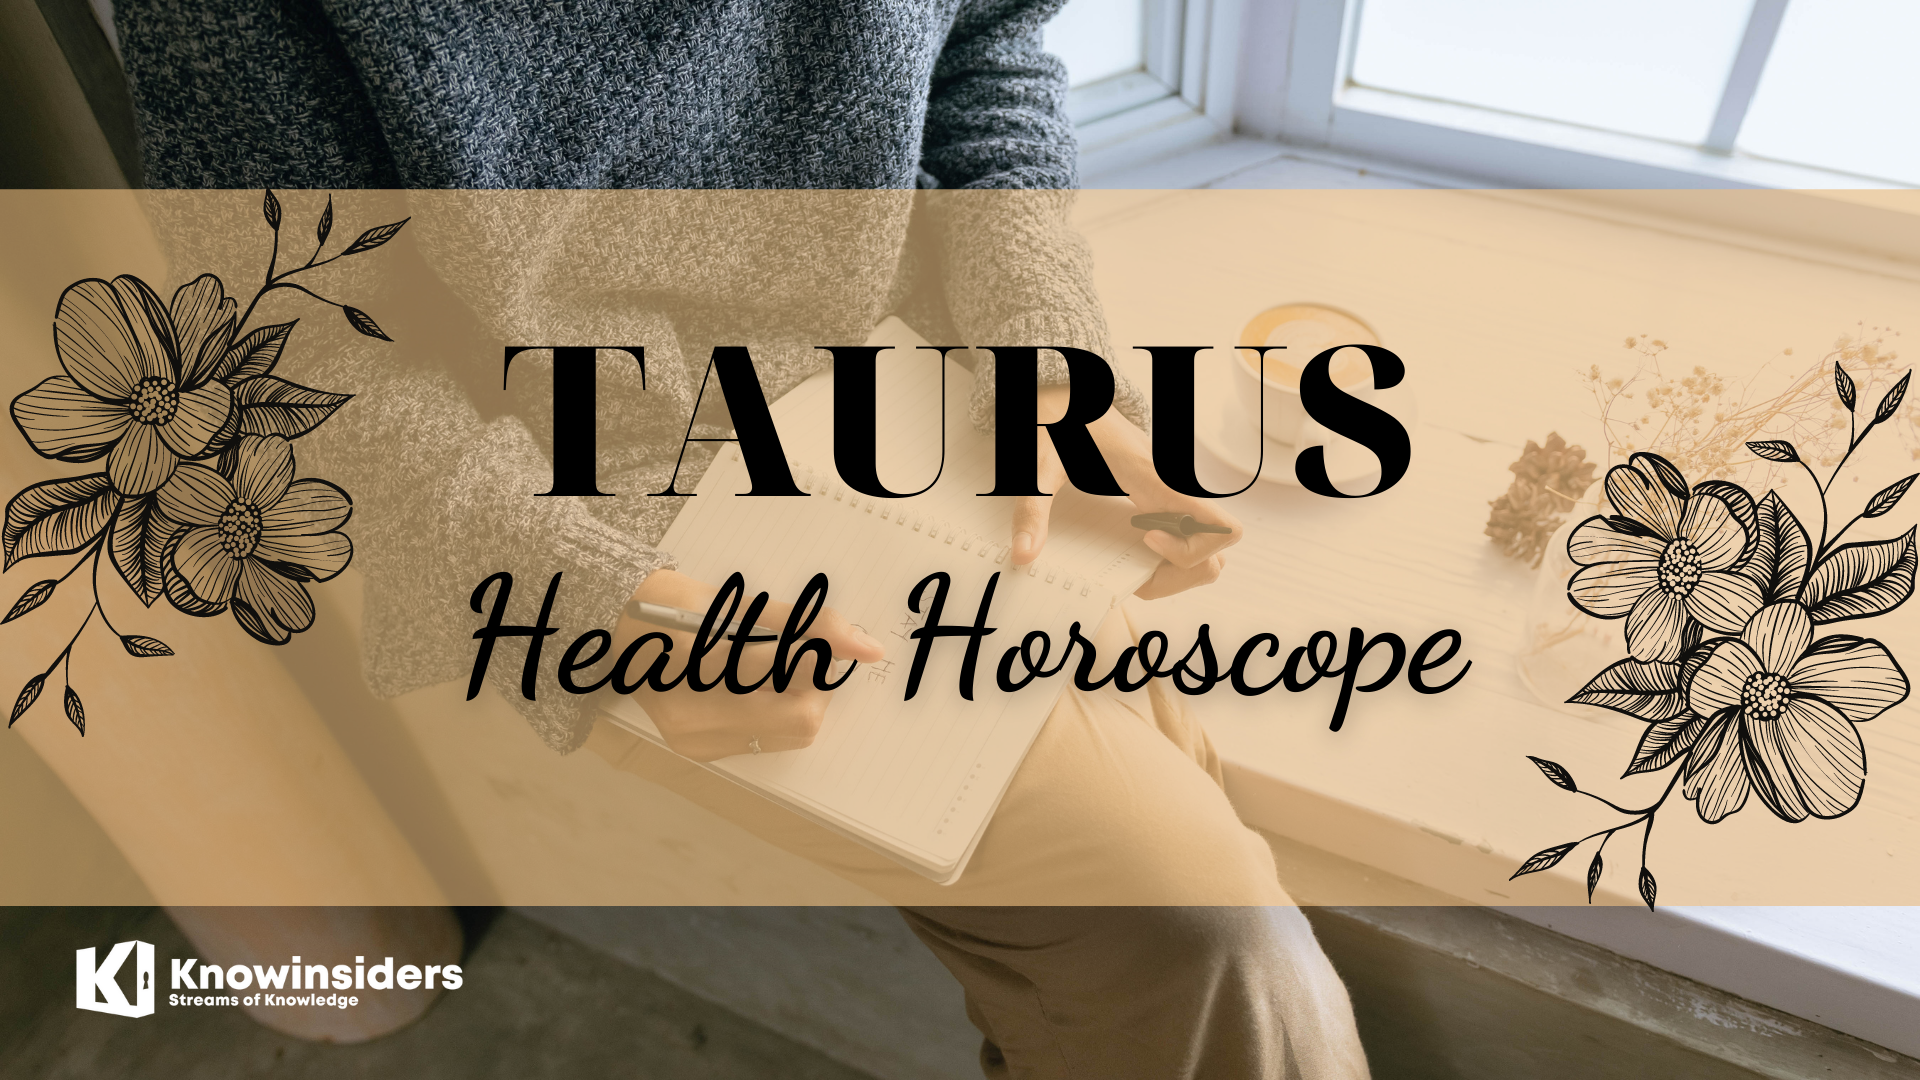 TAURUS Horoscope: Astrological Prediction for Health